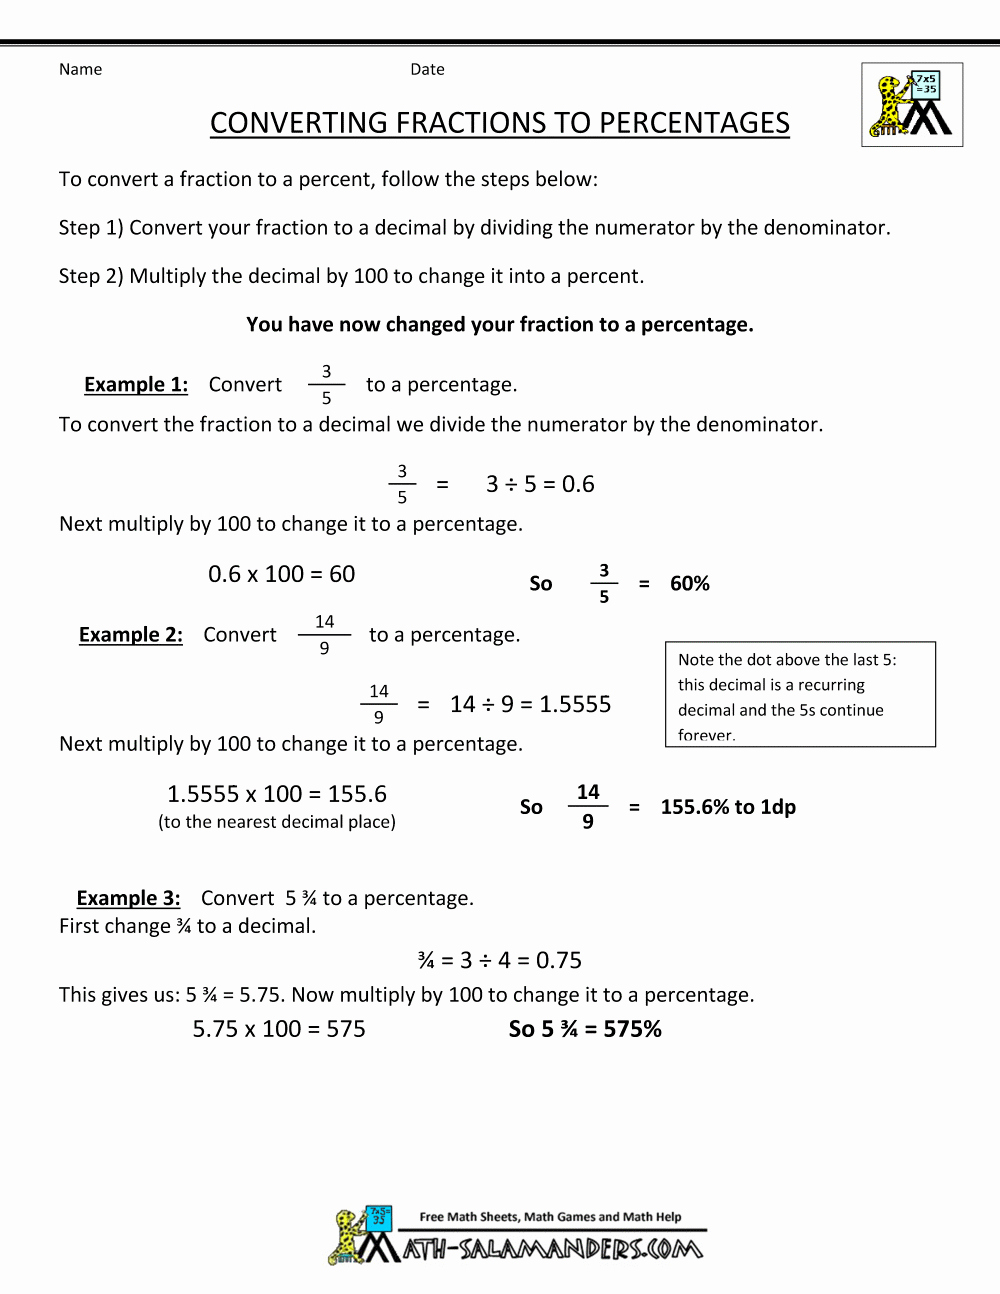 Fraction Decimal Percent Worksheet Pdf Fresh Converting Fractions to Percentages